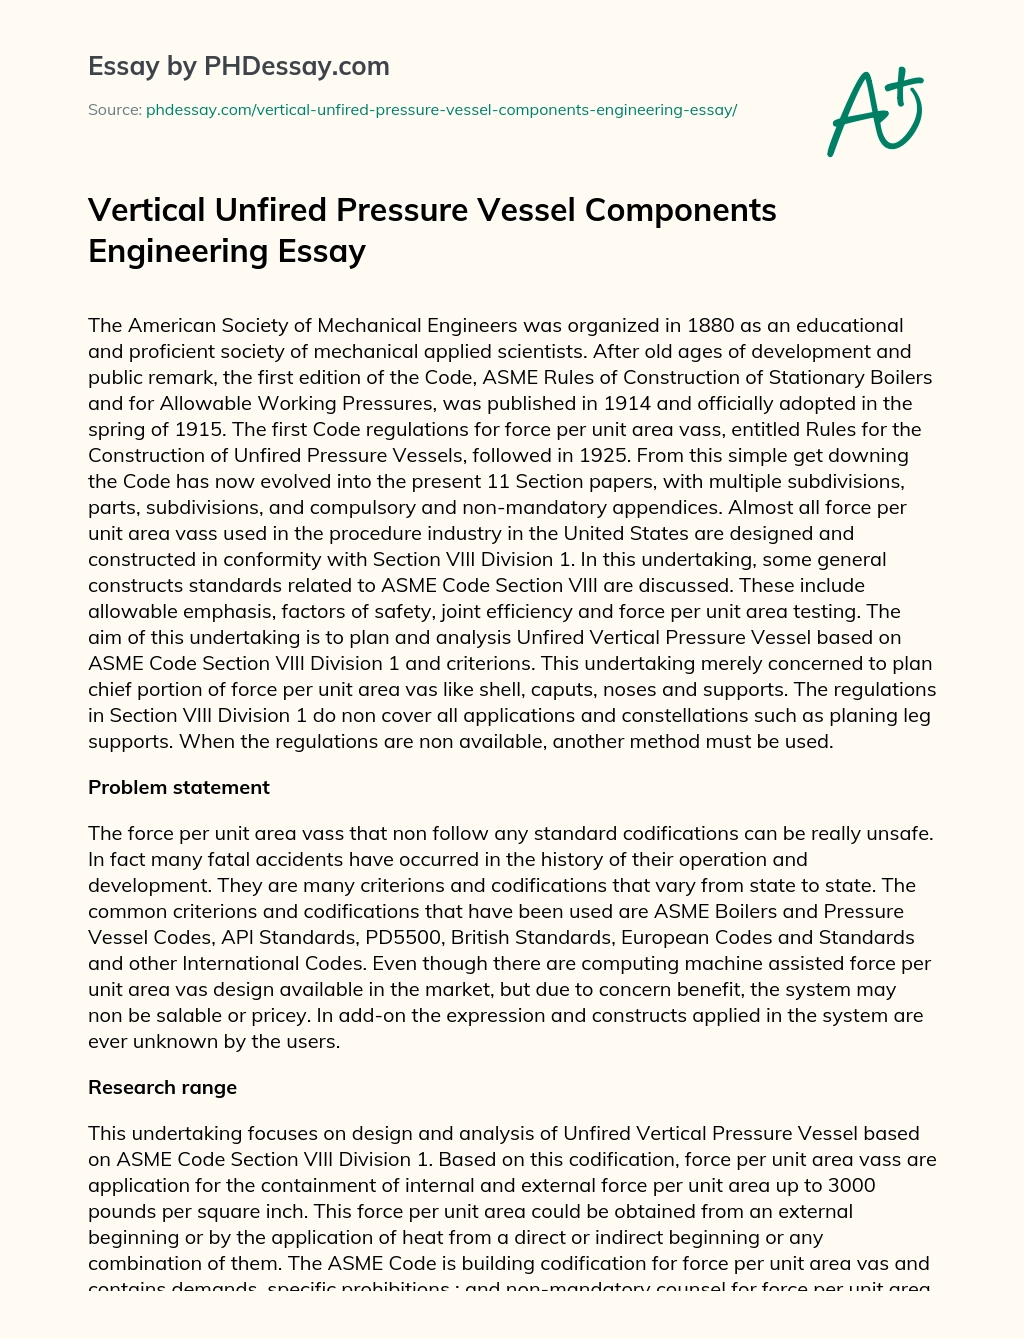 Vertical Unfired Pressure Vessel Components Engineering Essay essay